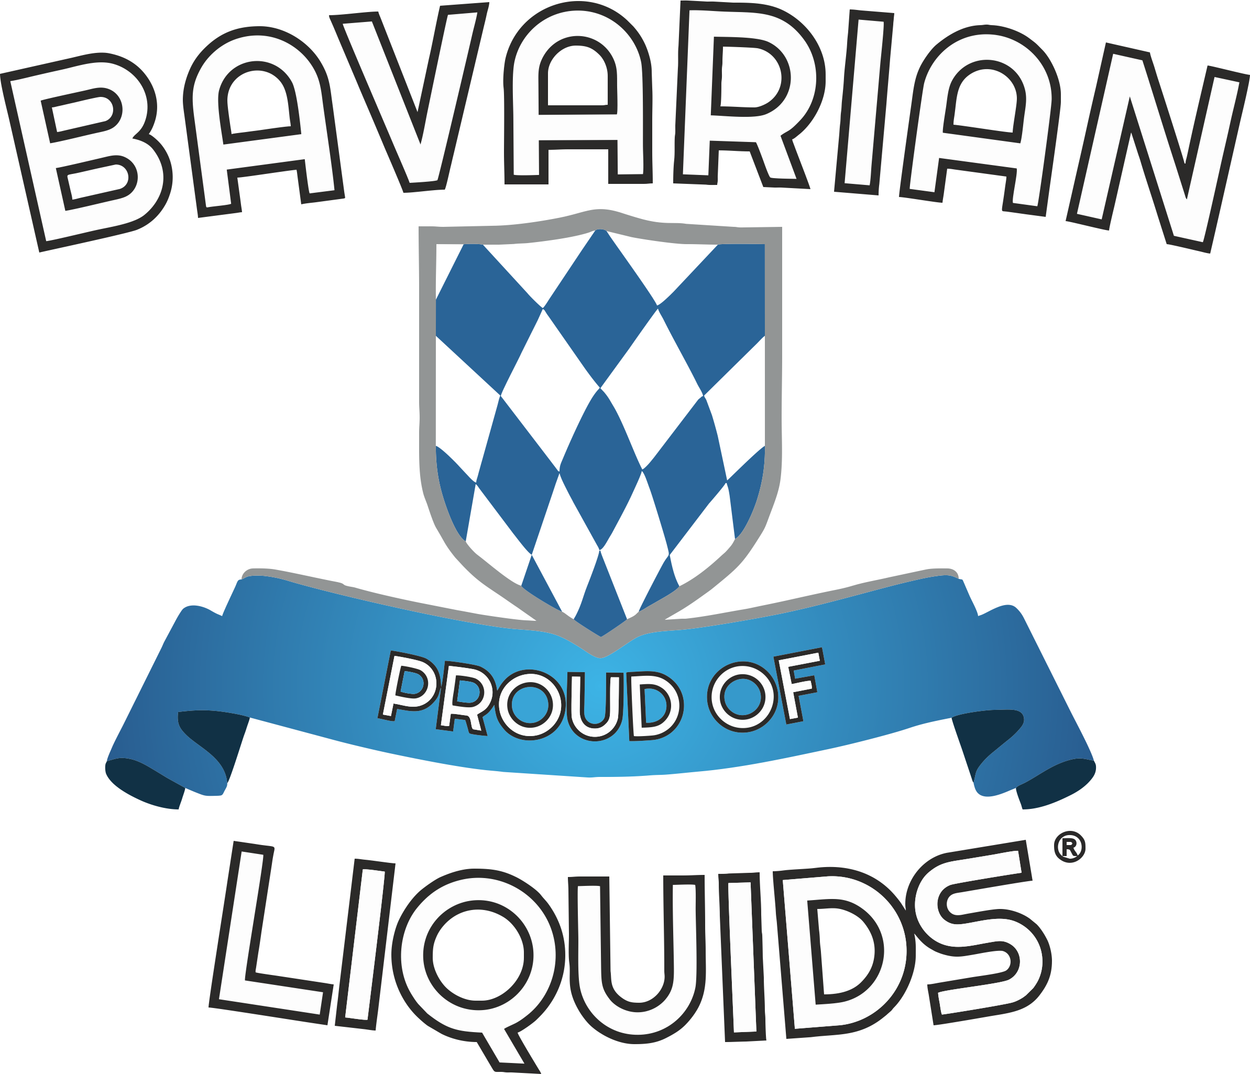 Bavarian Liquids